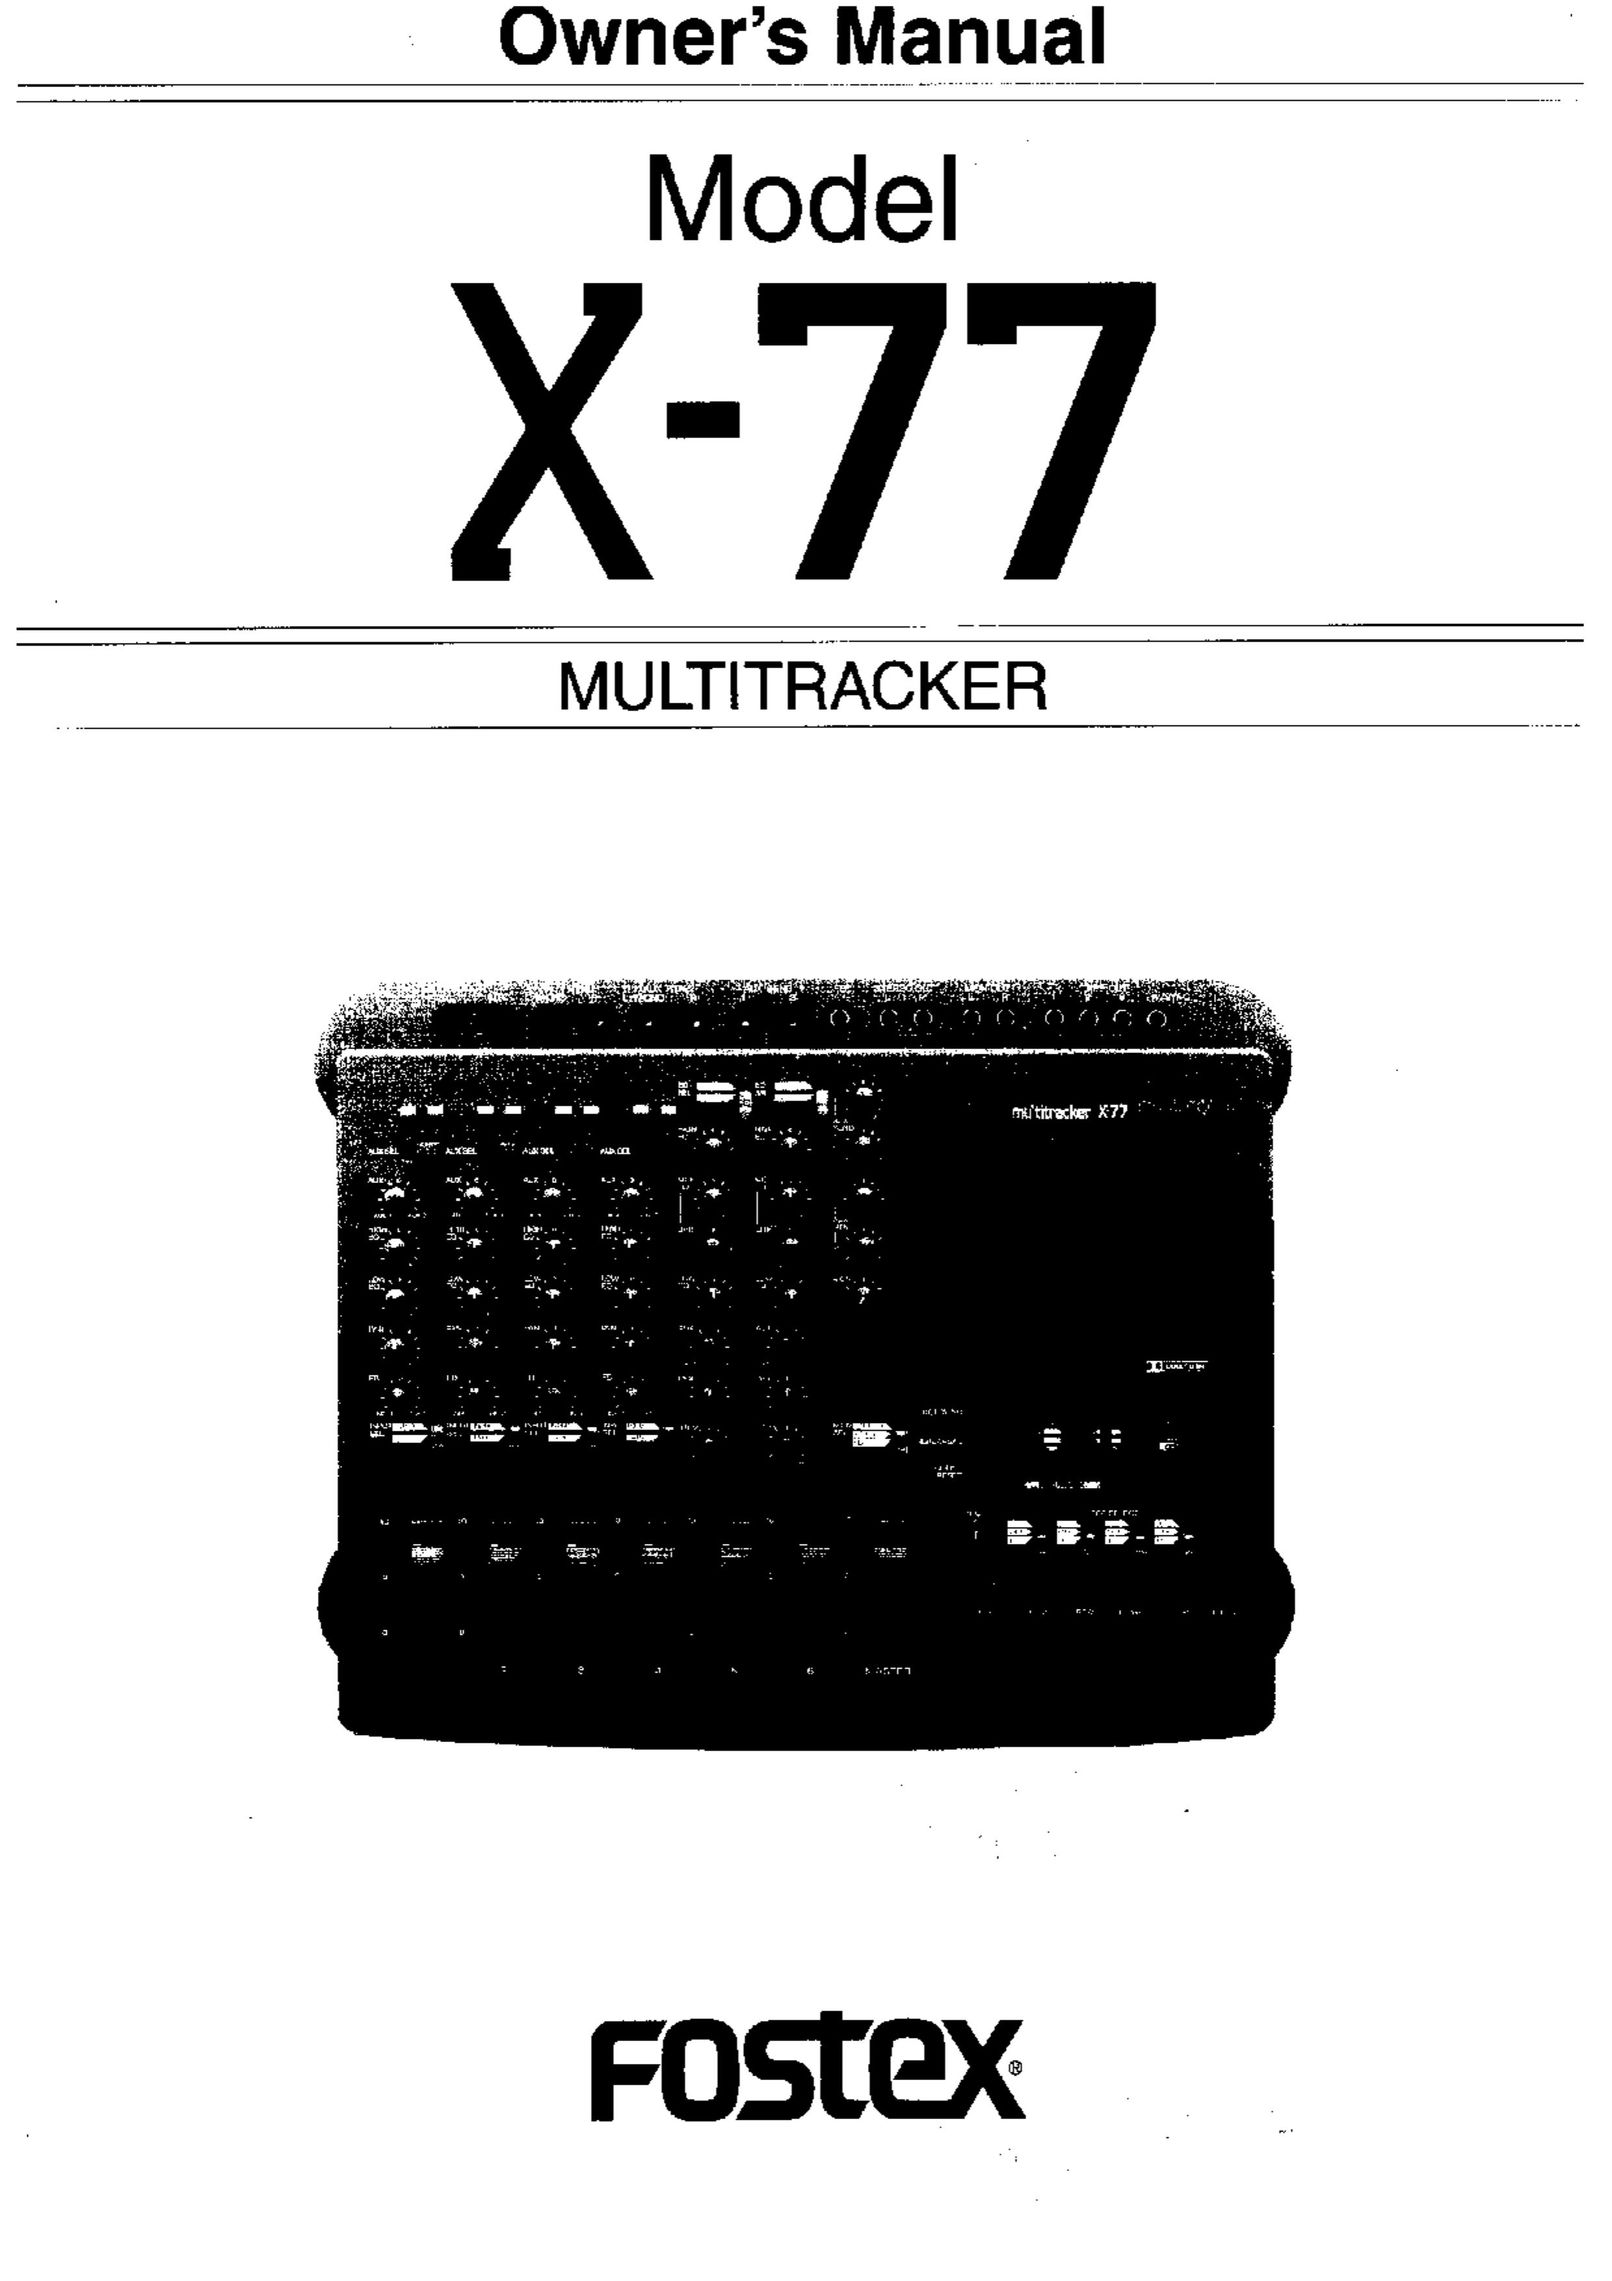 Fostex X-77 Microcassette Recorder User Manual